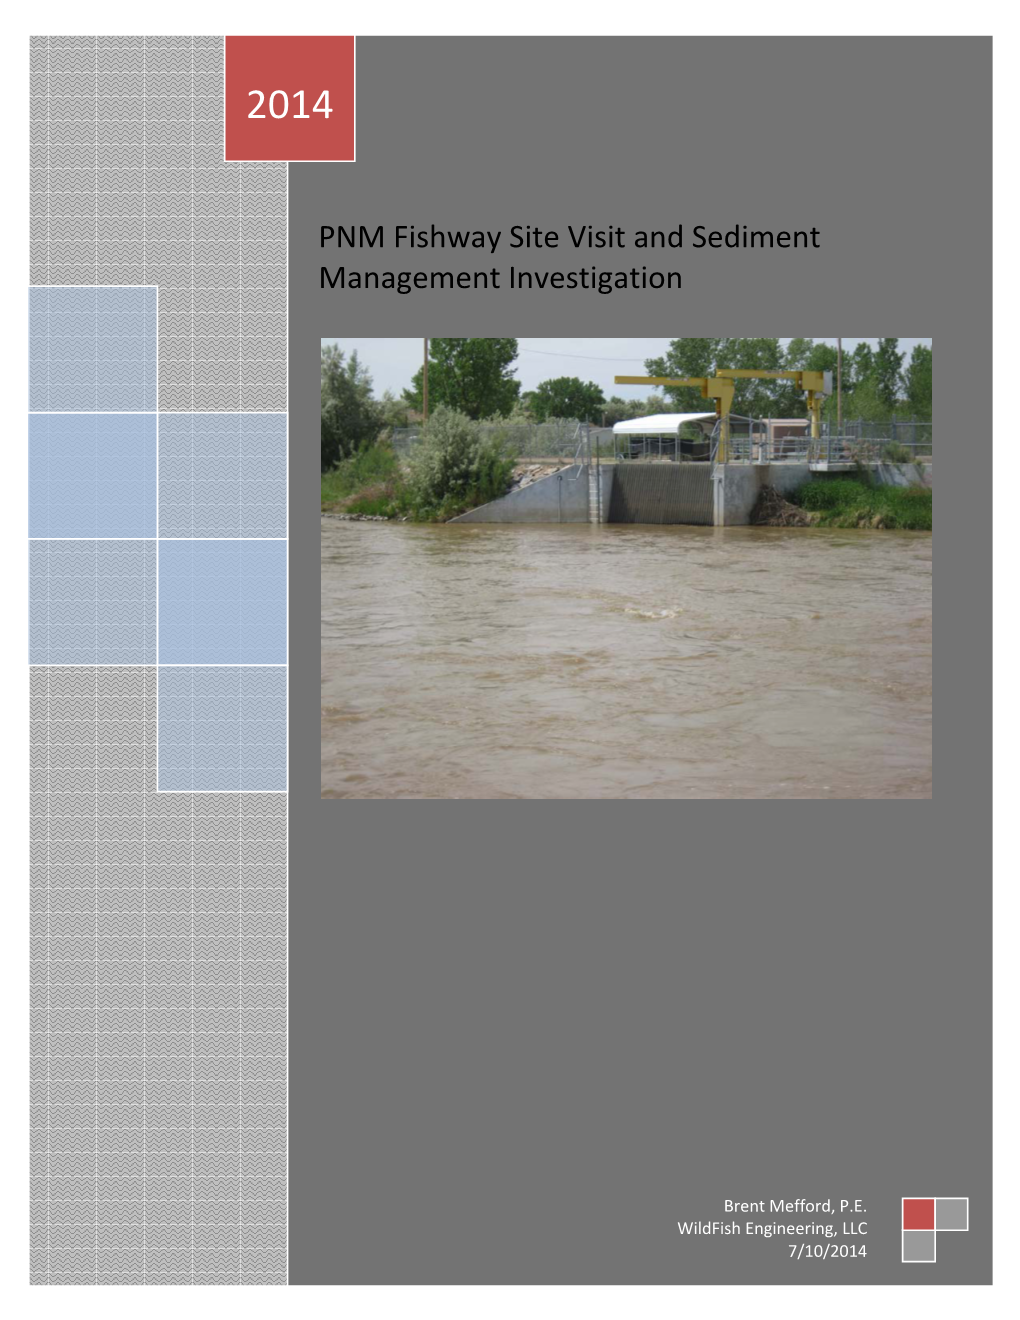 PNM Fishway Site Visit and Sediment Management Investigation